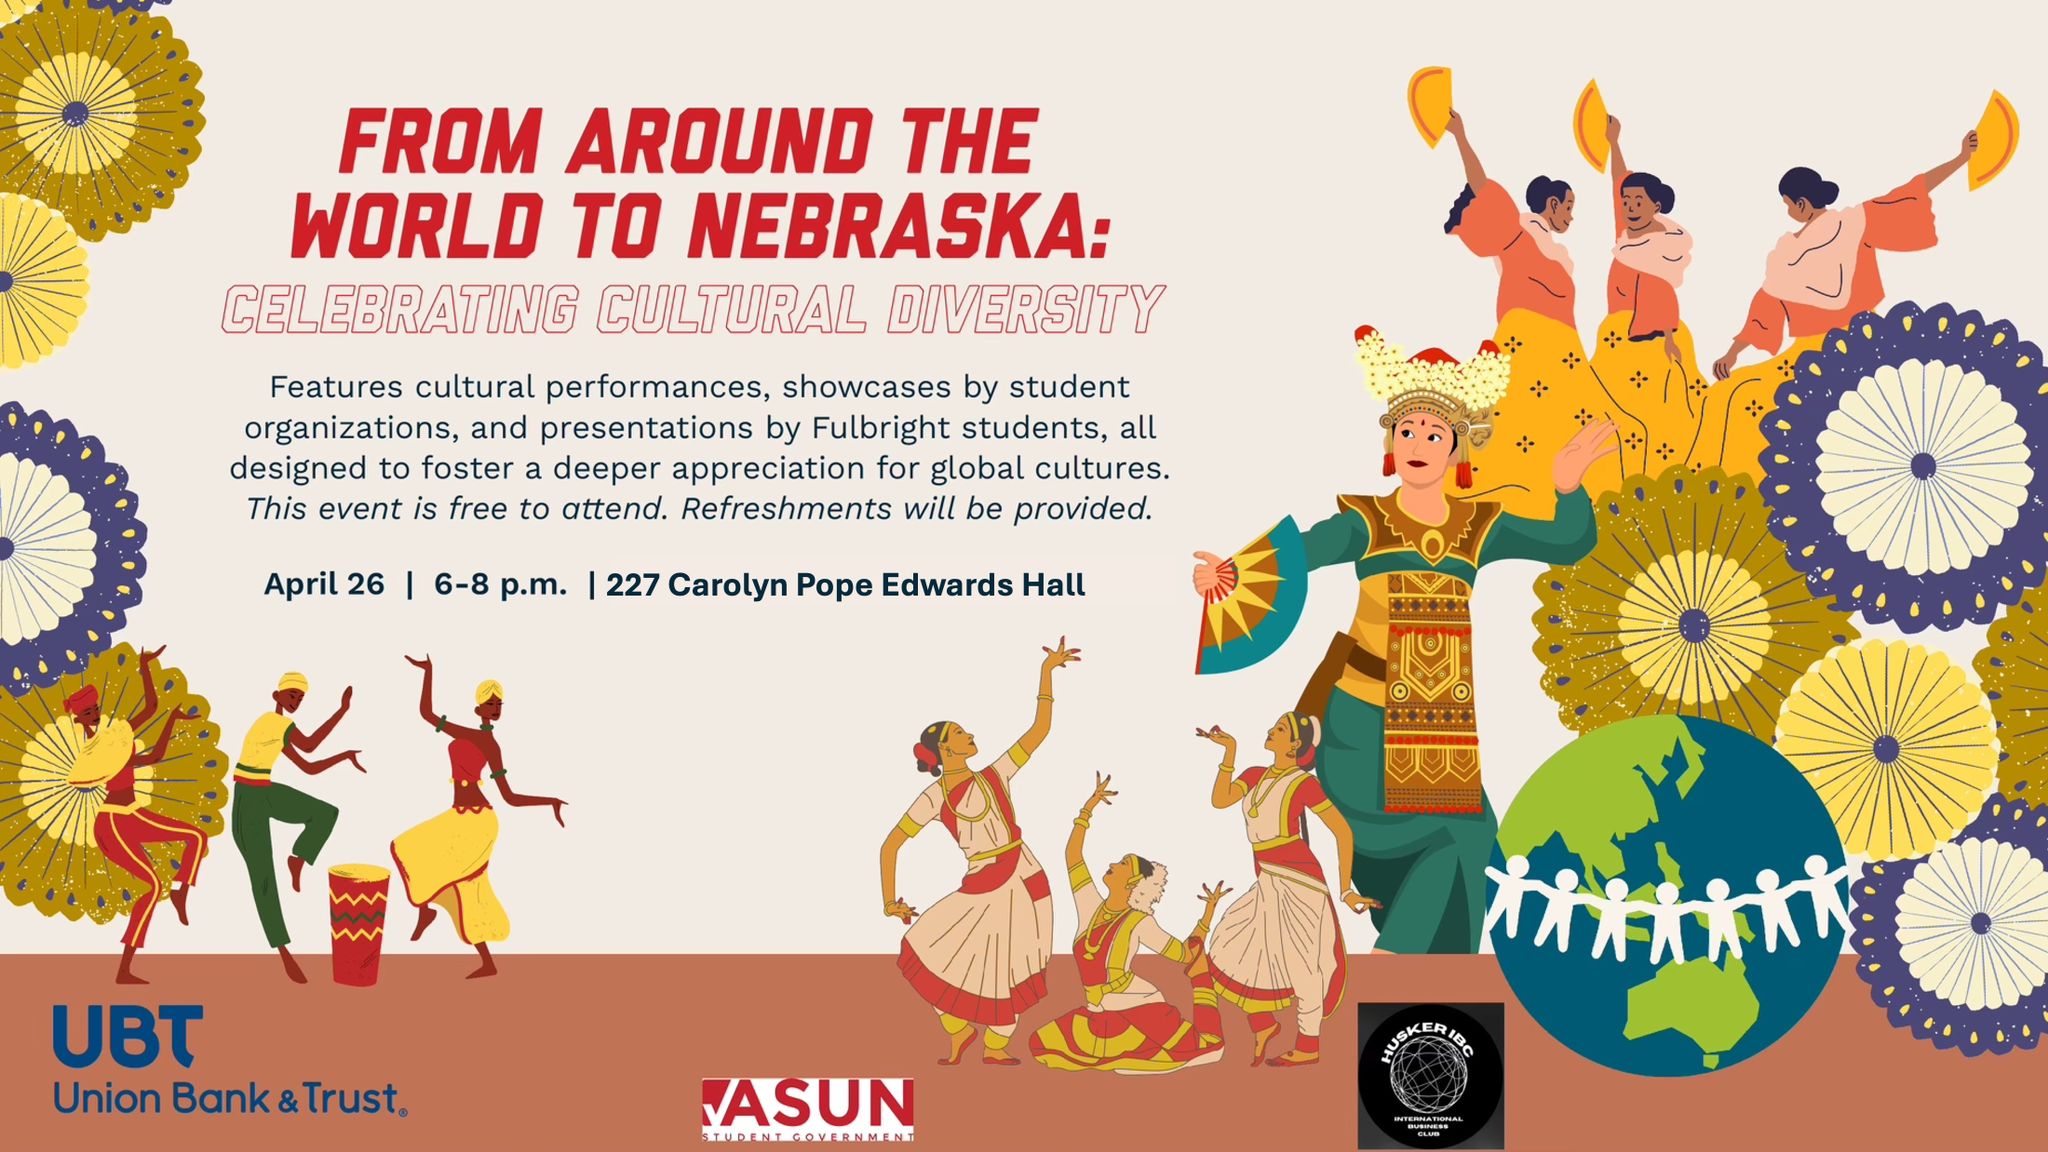 From around the world to Nebraska: celebrating cultural diversity.